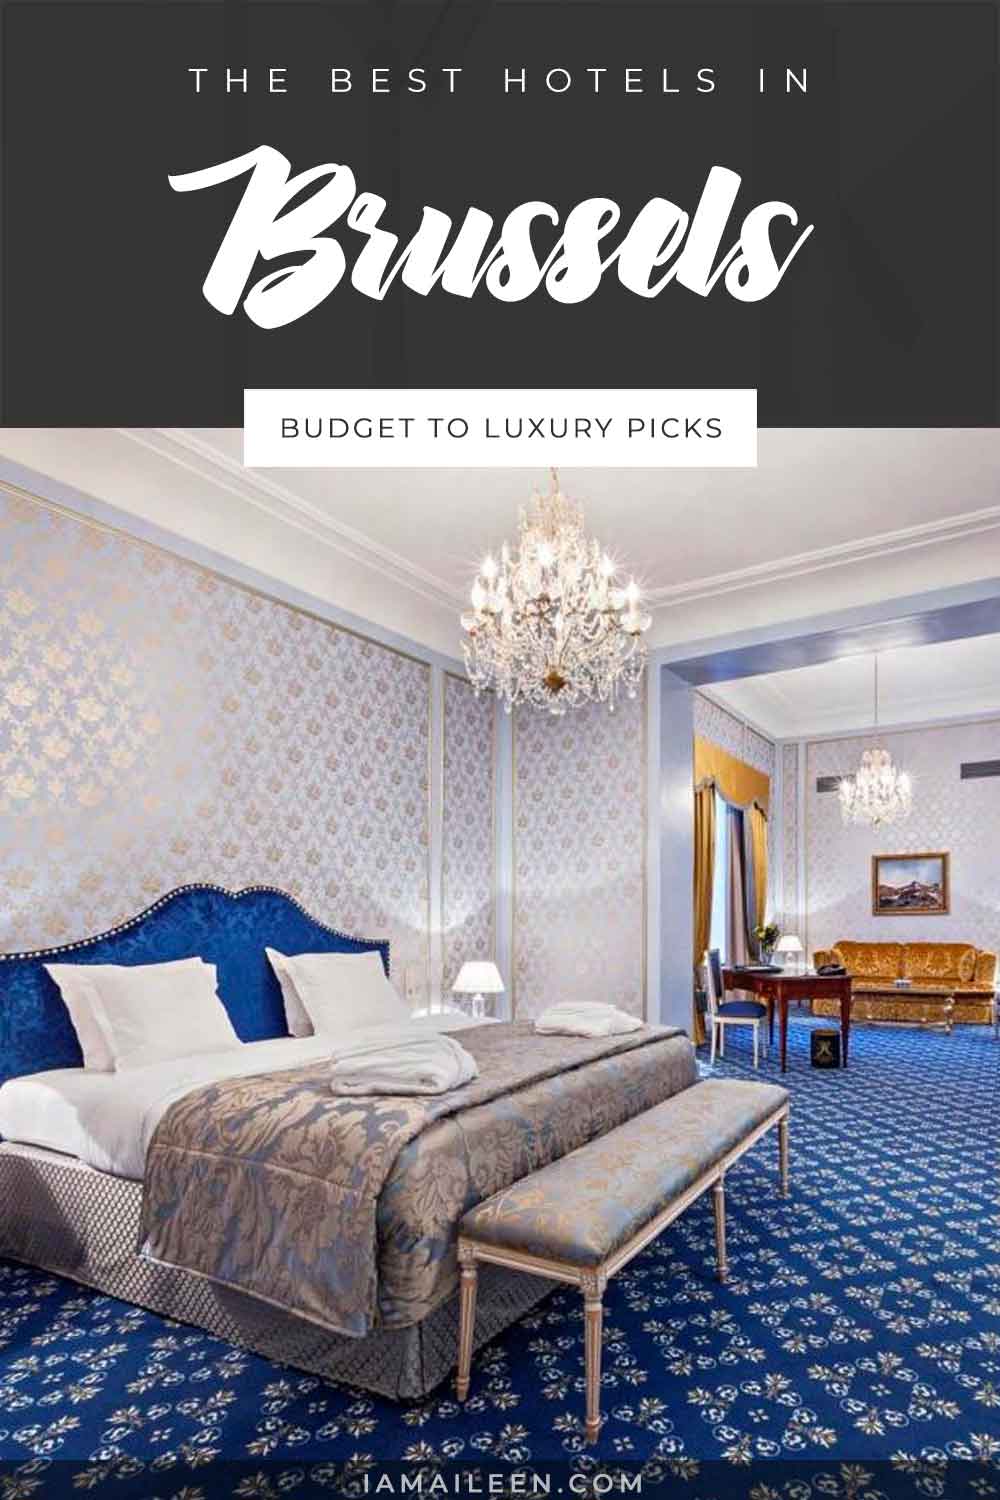 Best Hotels in Brussels